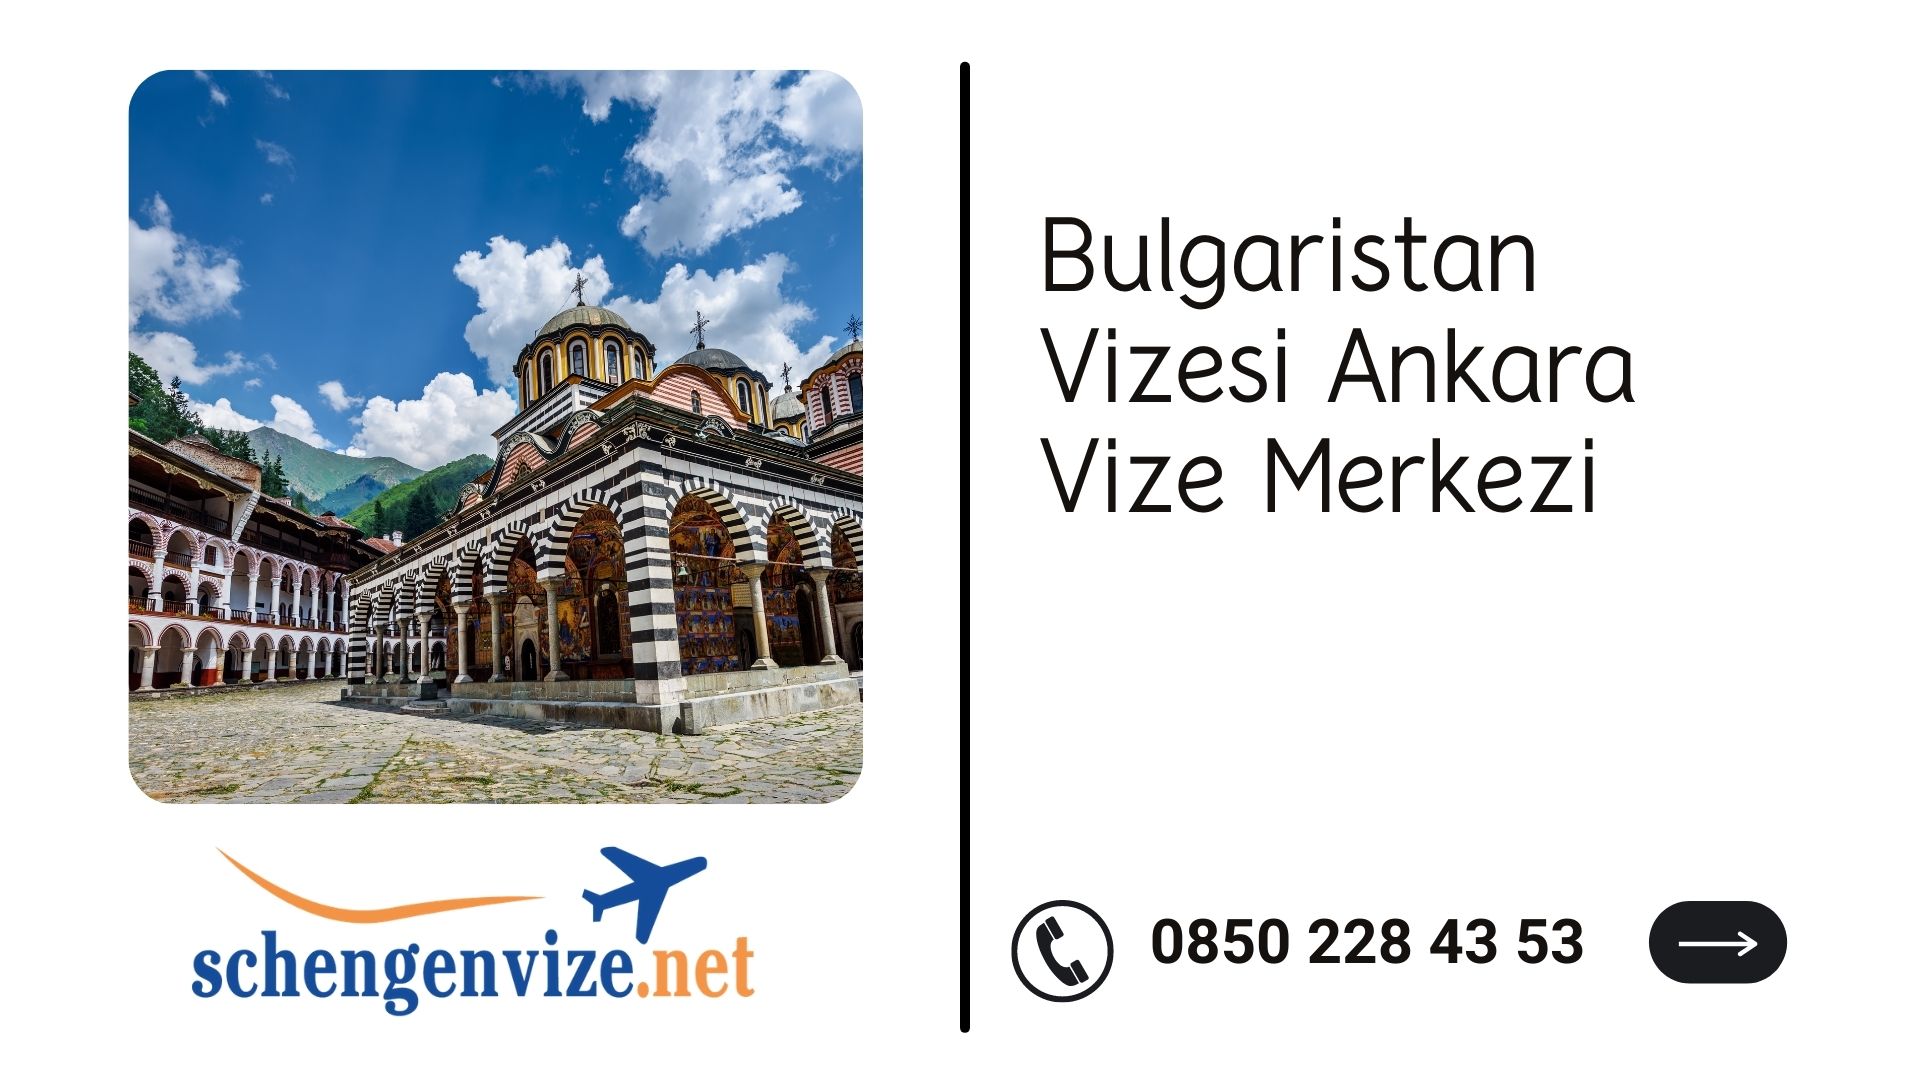 bulgaristan vizesi ankara vize merkezi schengen vize